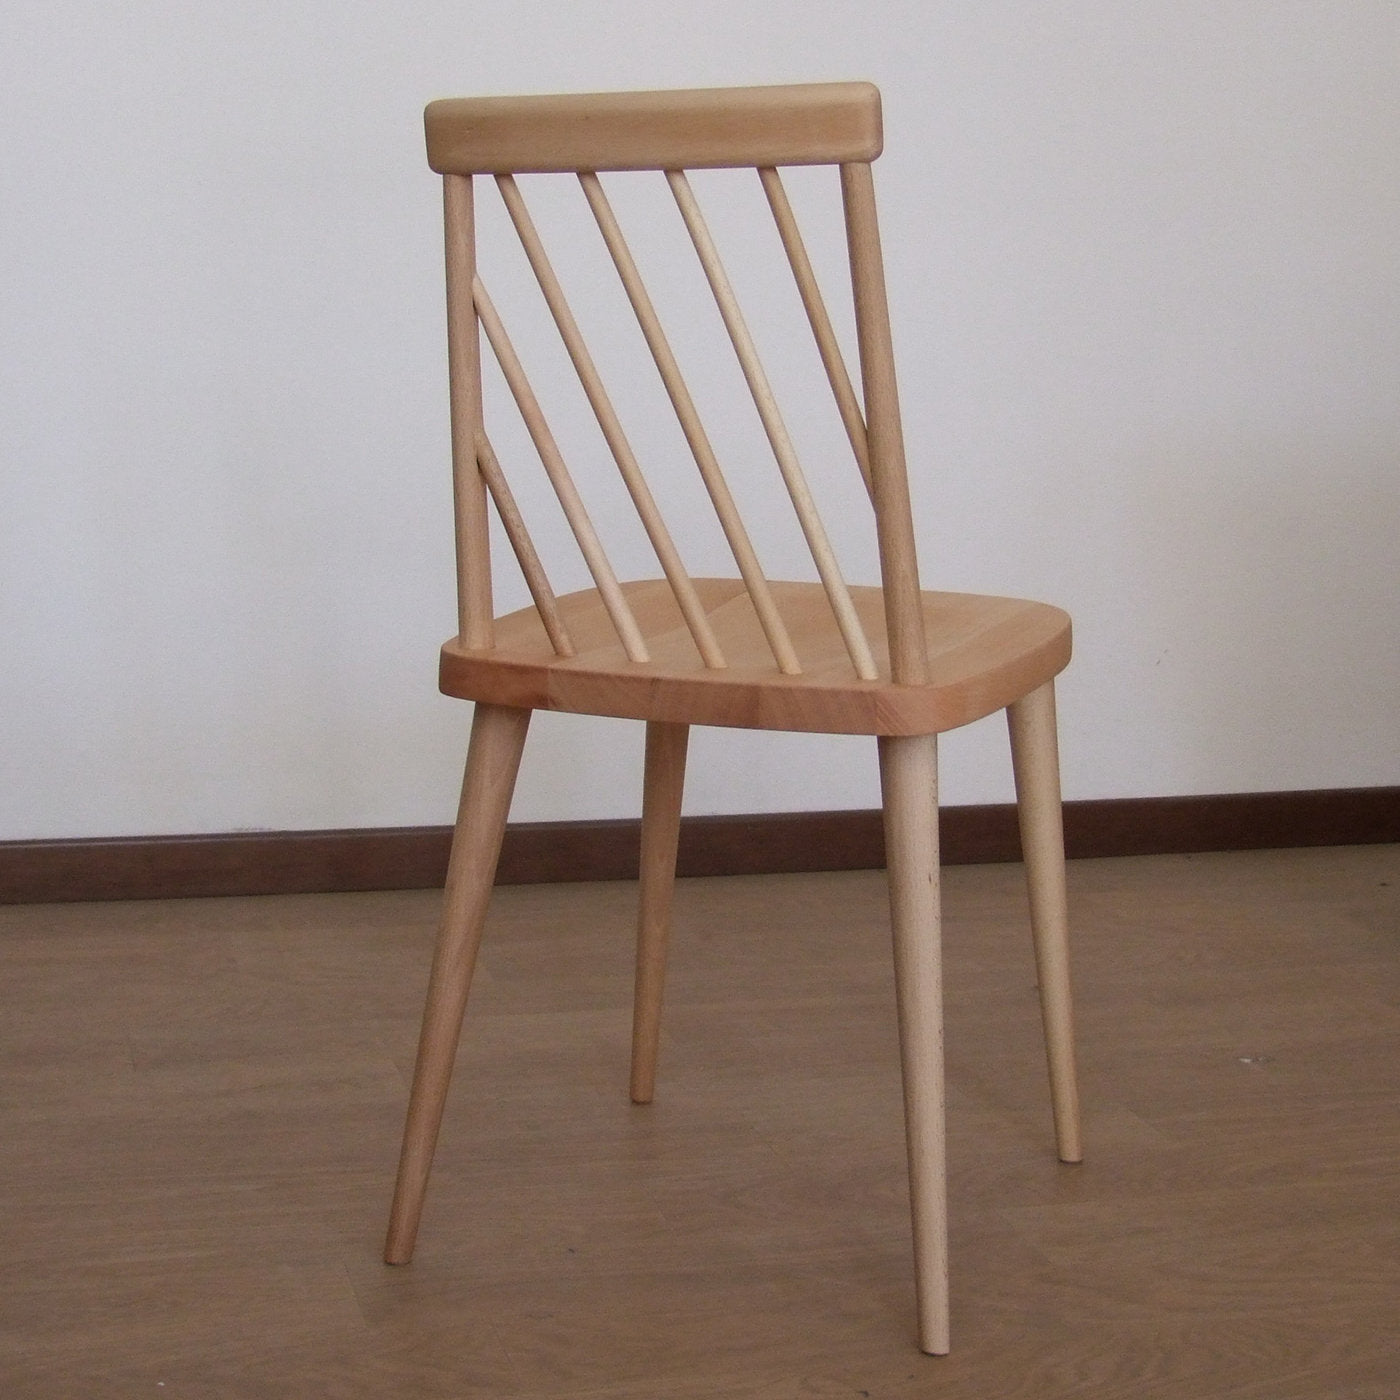 Diagonal Set of 2 Chairs - Alternative view 1